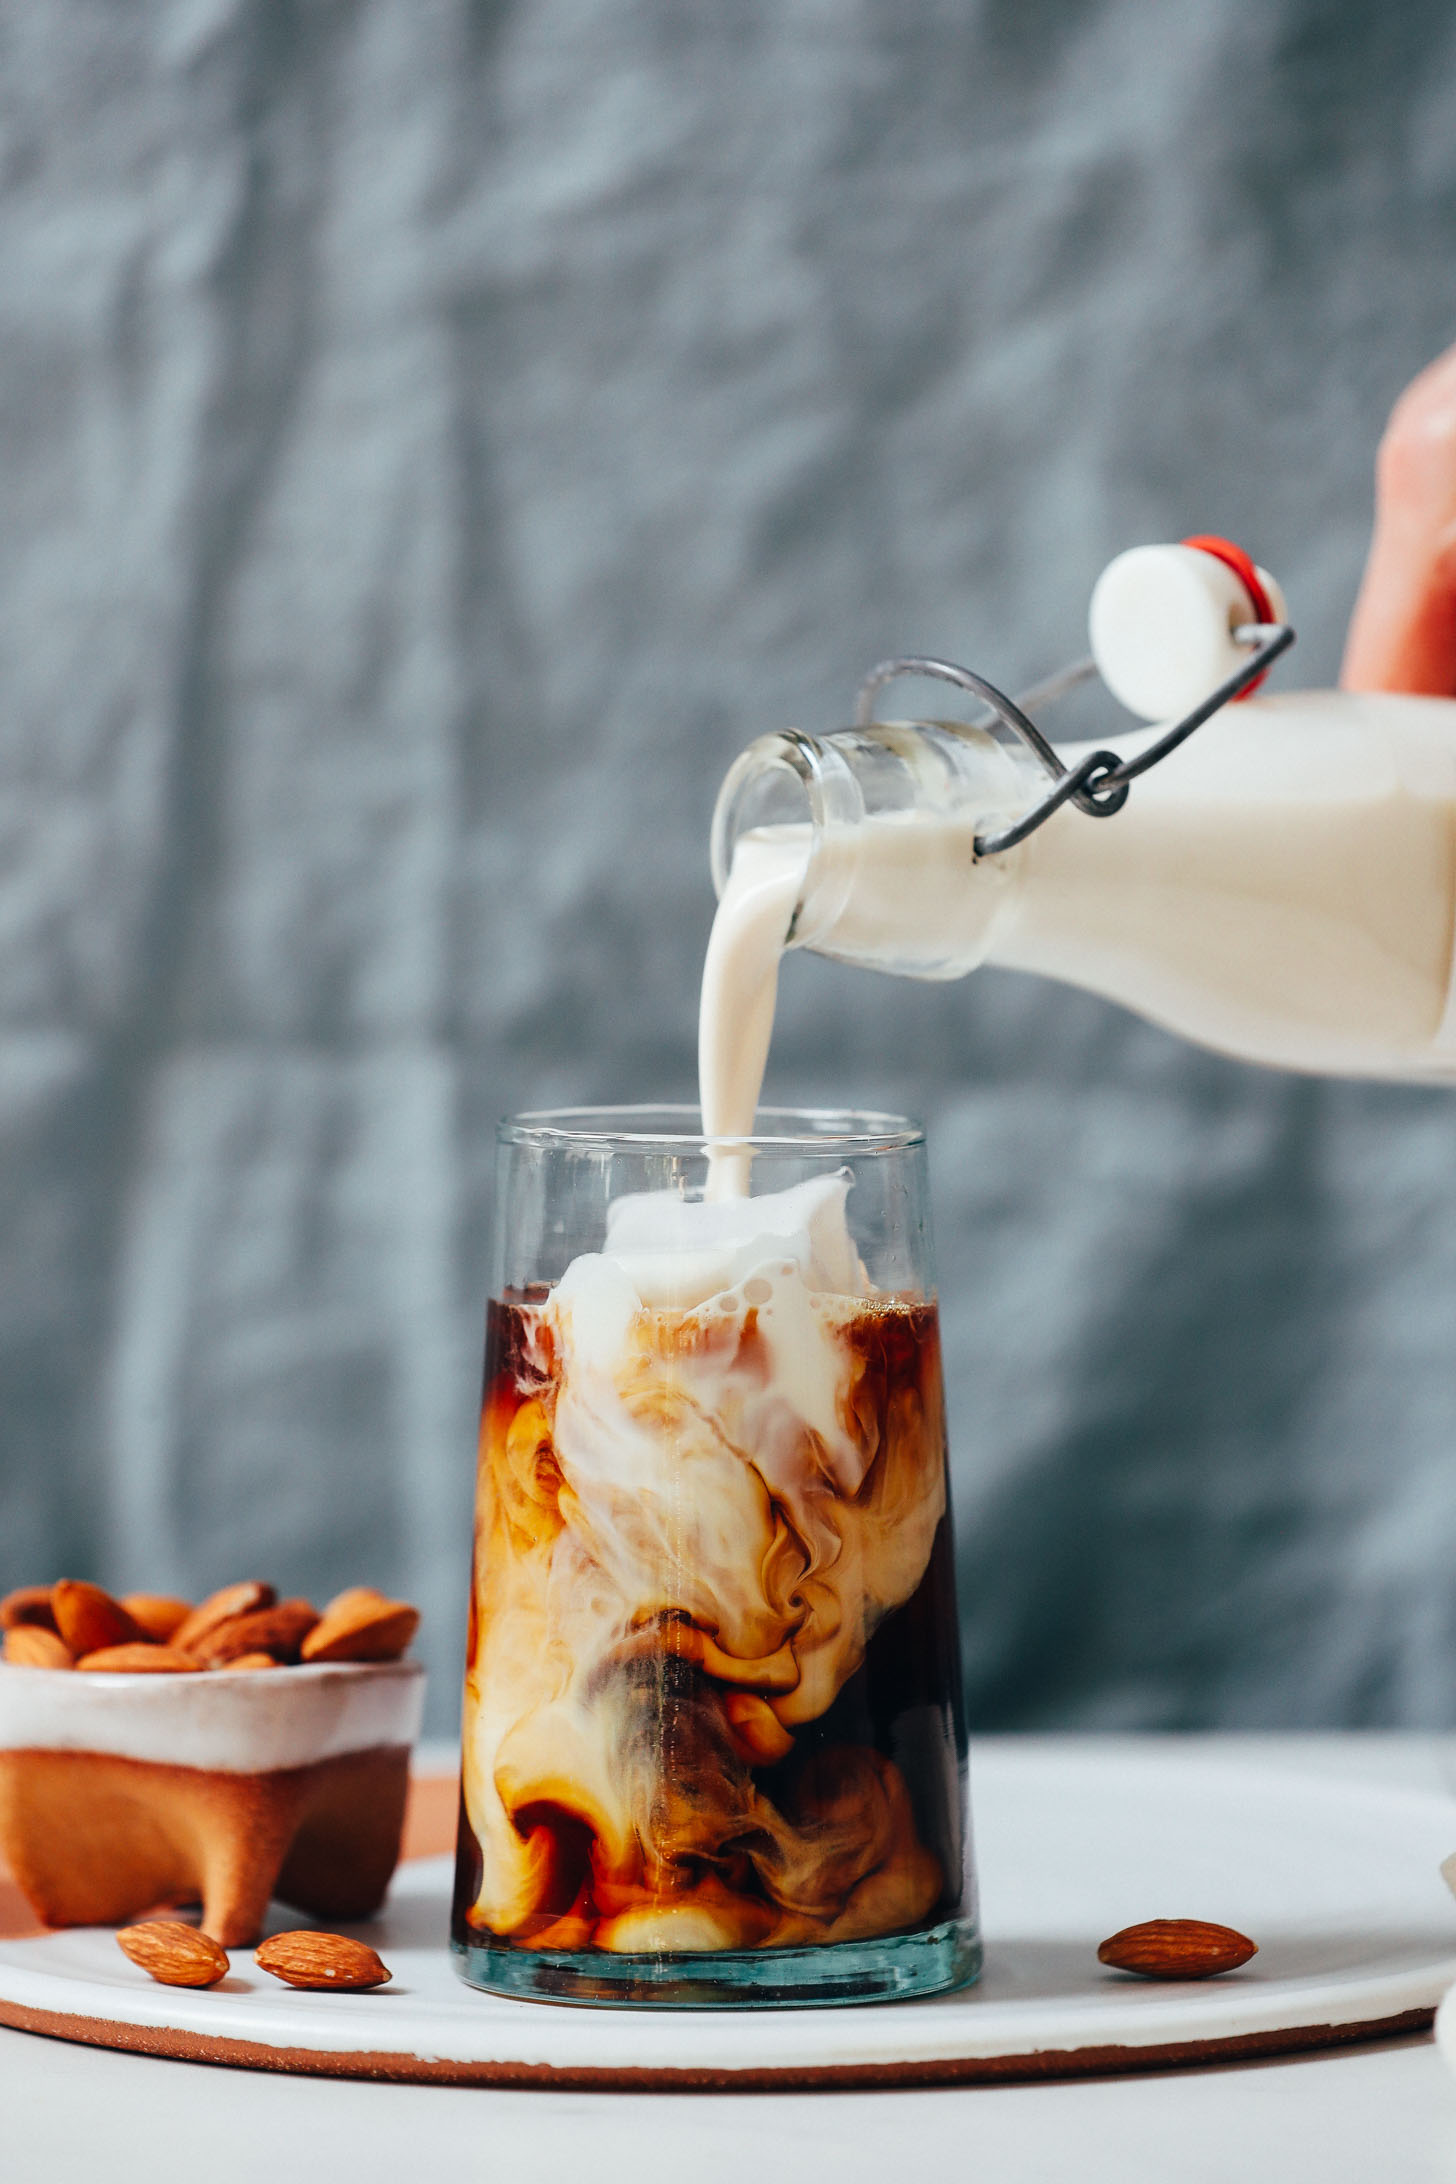 Pouring homemade Dairy-Free Coffee Creamer into an iced coffee